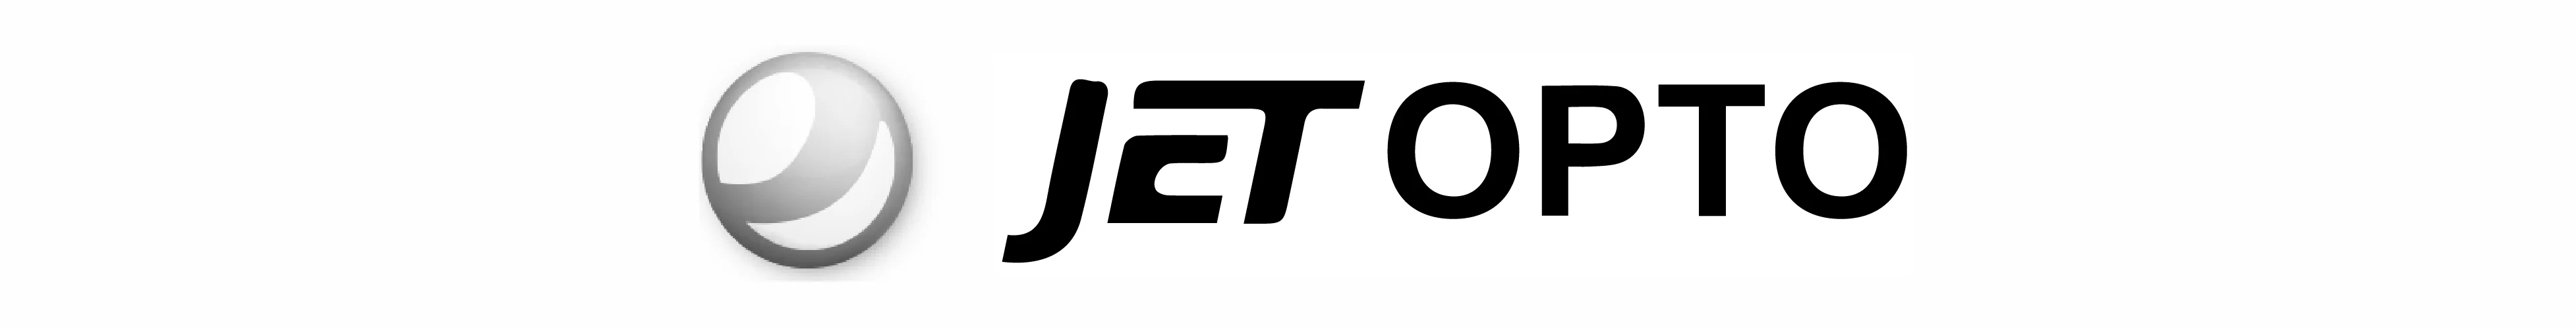 Jetopto_logo